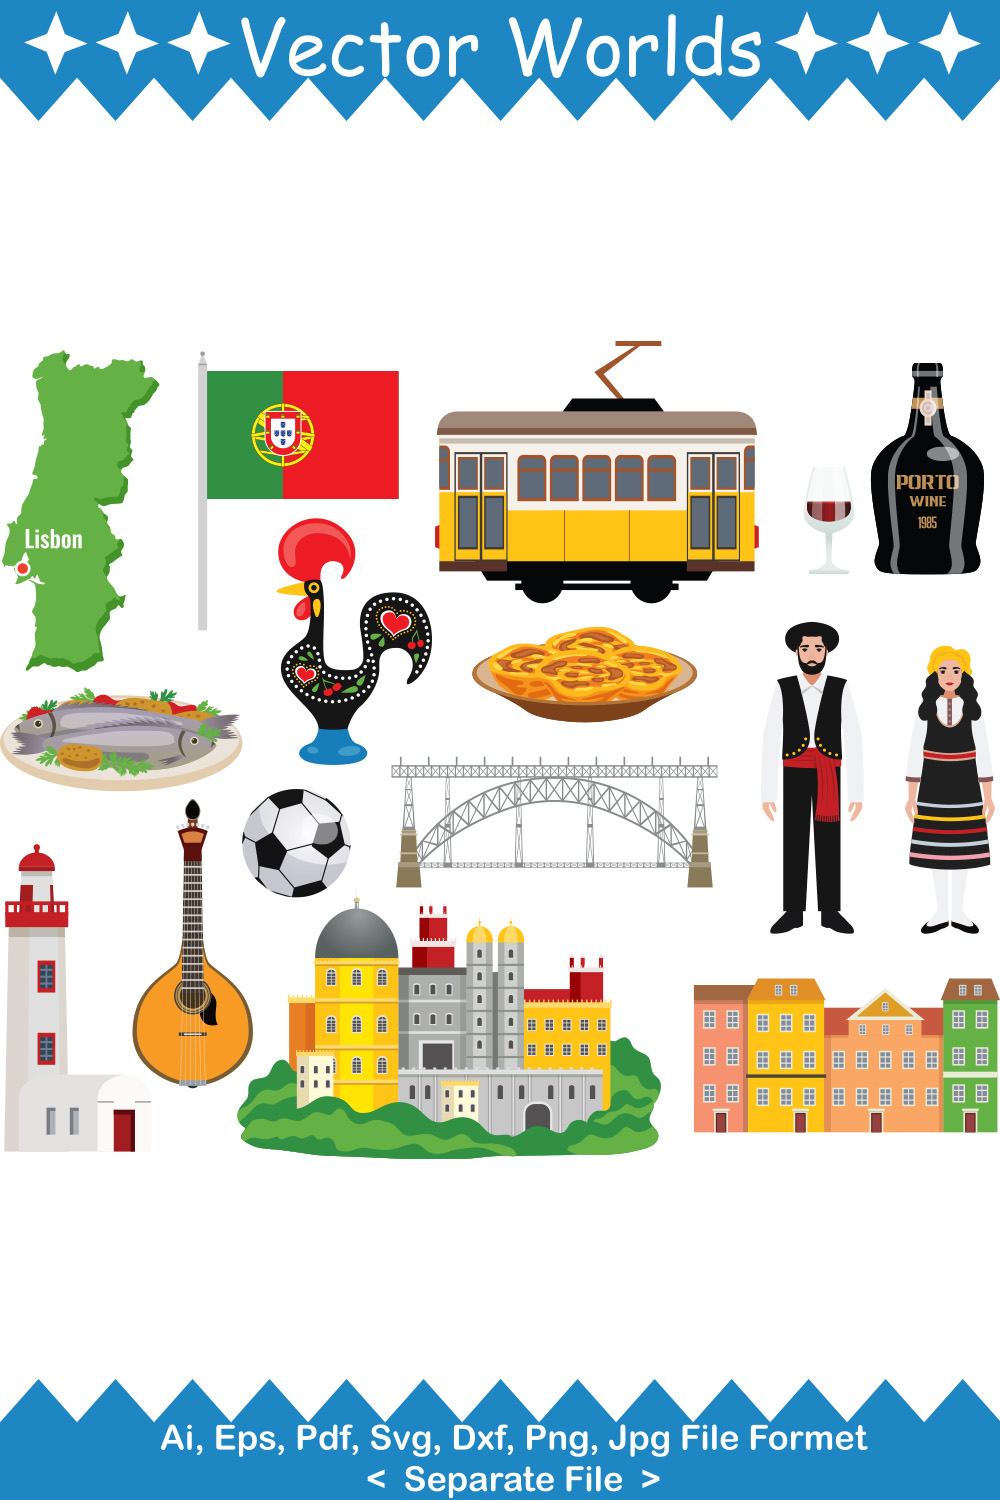 Portugal tourism SVG Vector Design pinterest preview image.